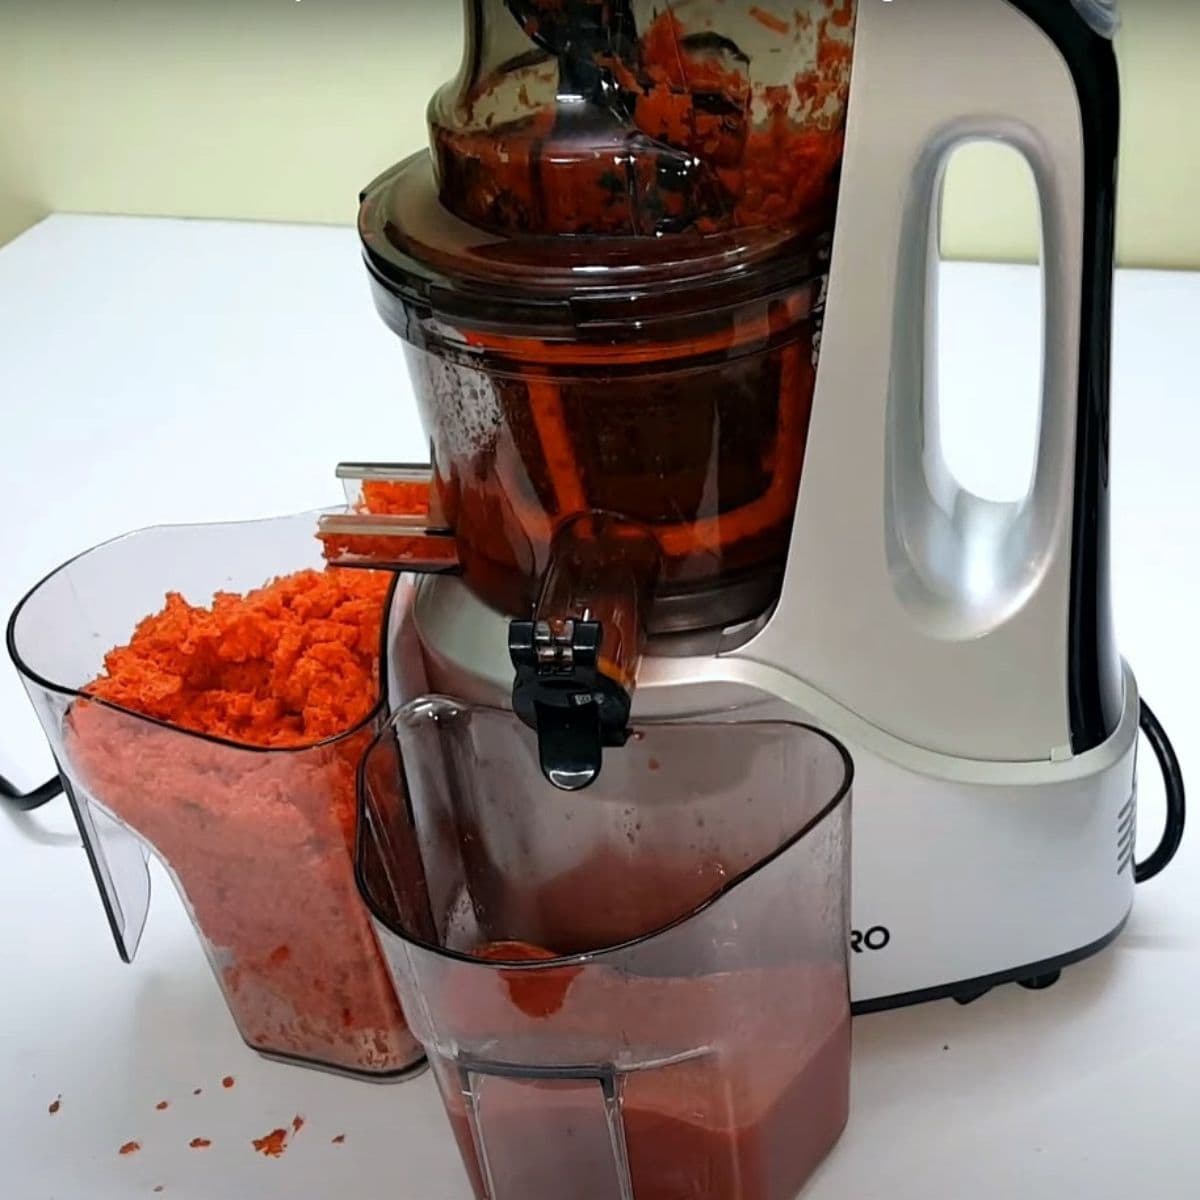 Juicing carrots in Agaro cold press juicer